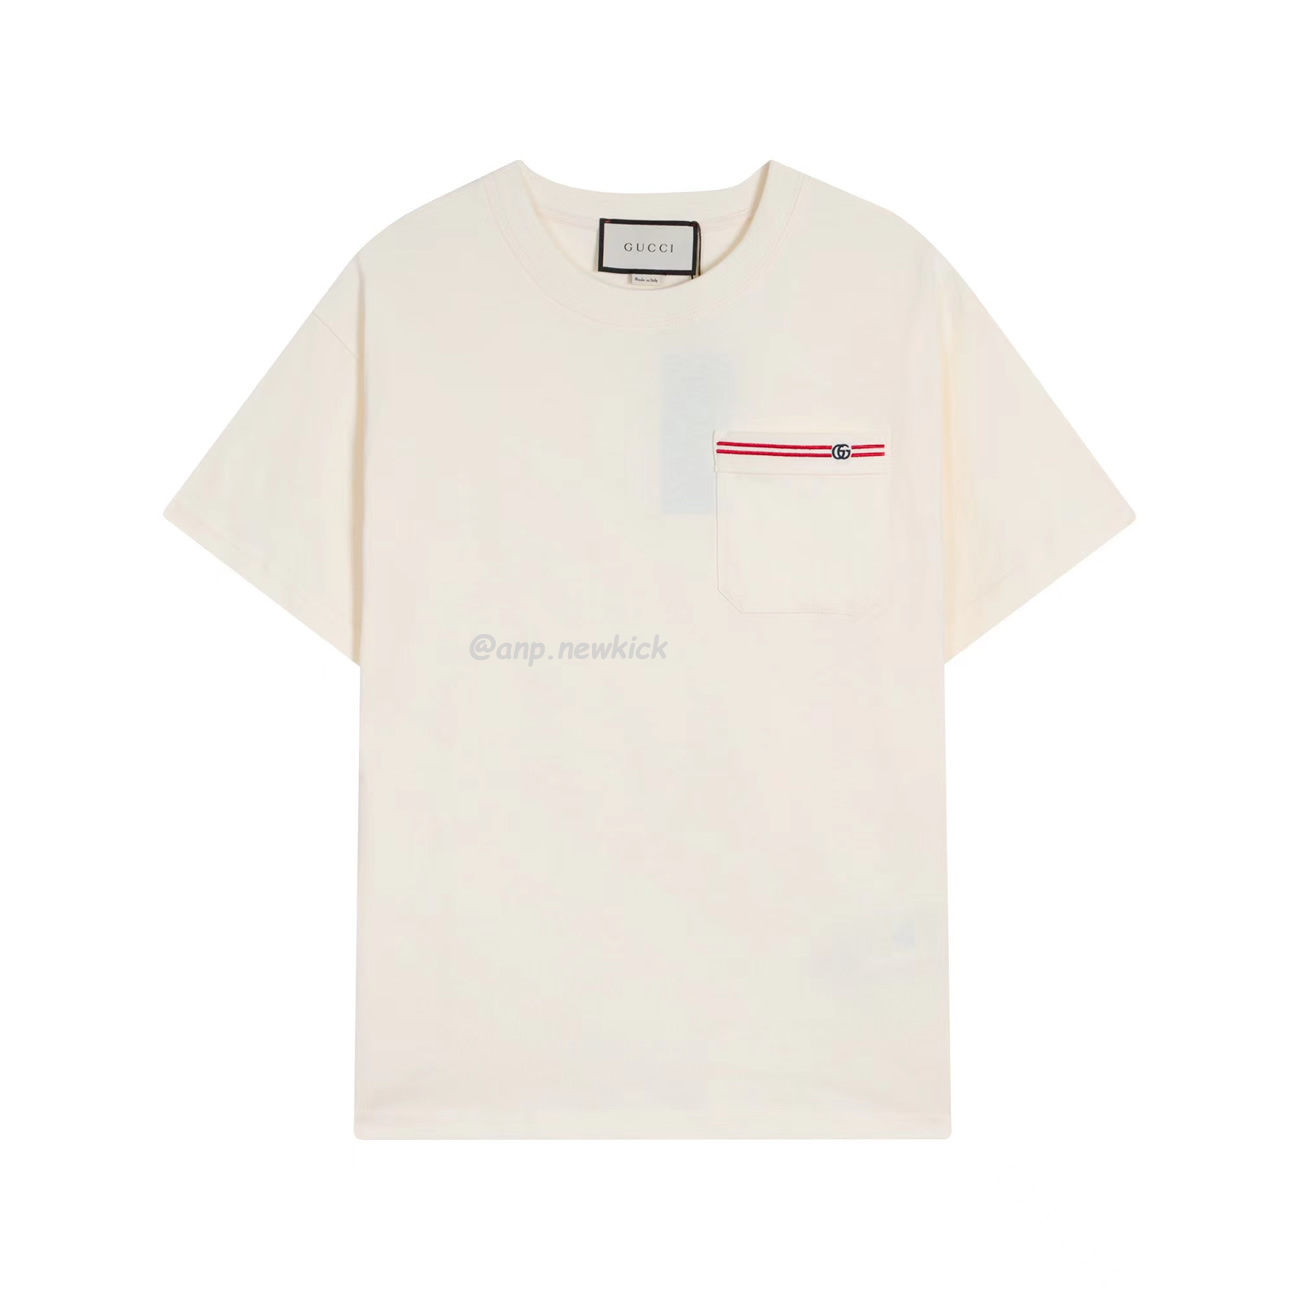 Gucci XJDVI EMRBOIDERY T-shirt White 673710